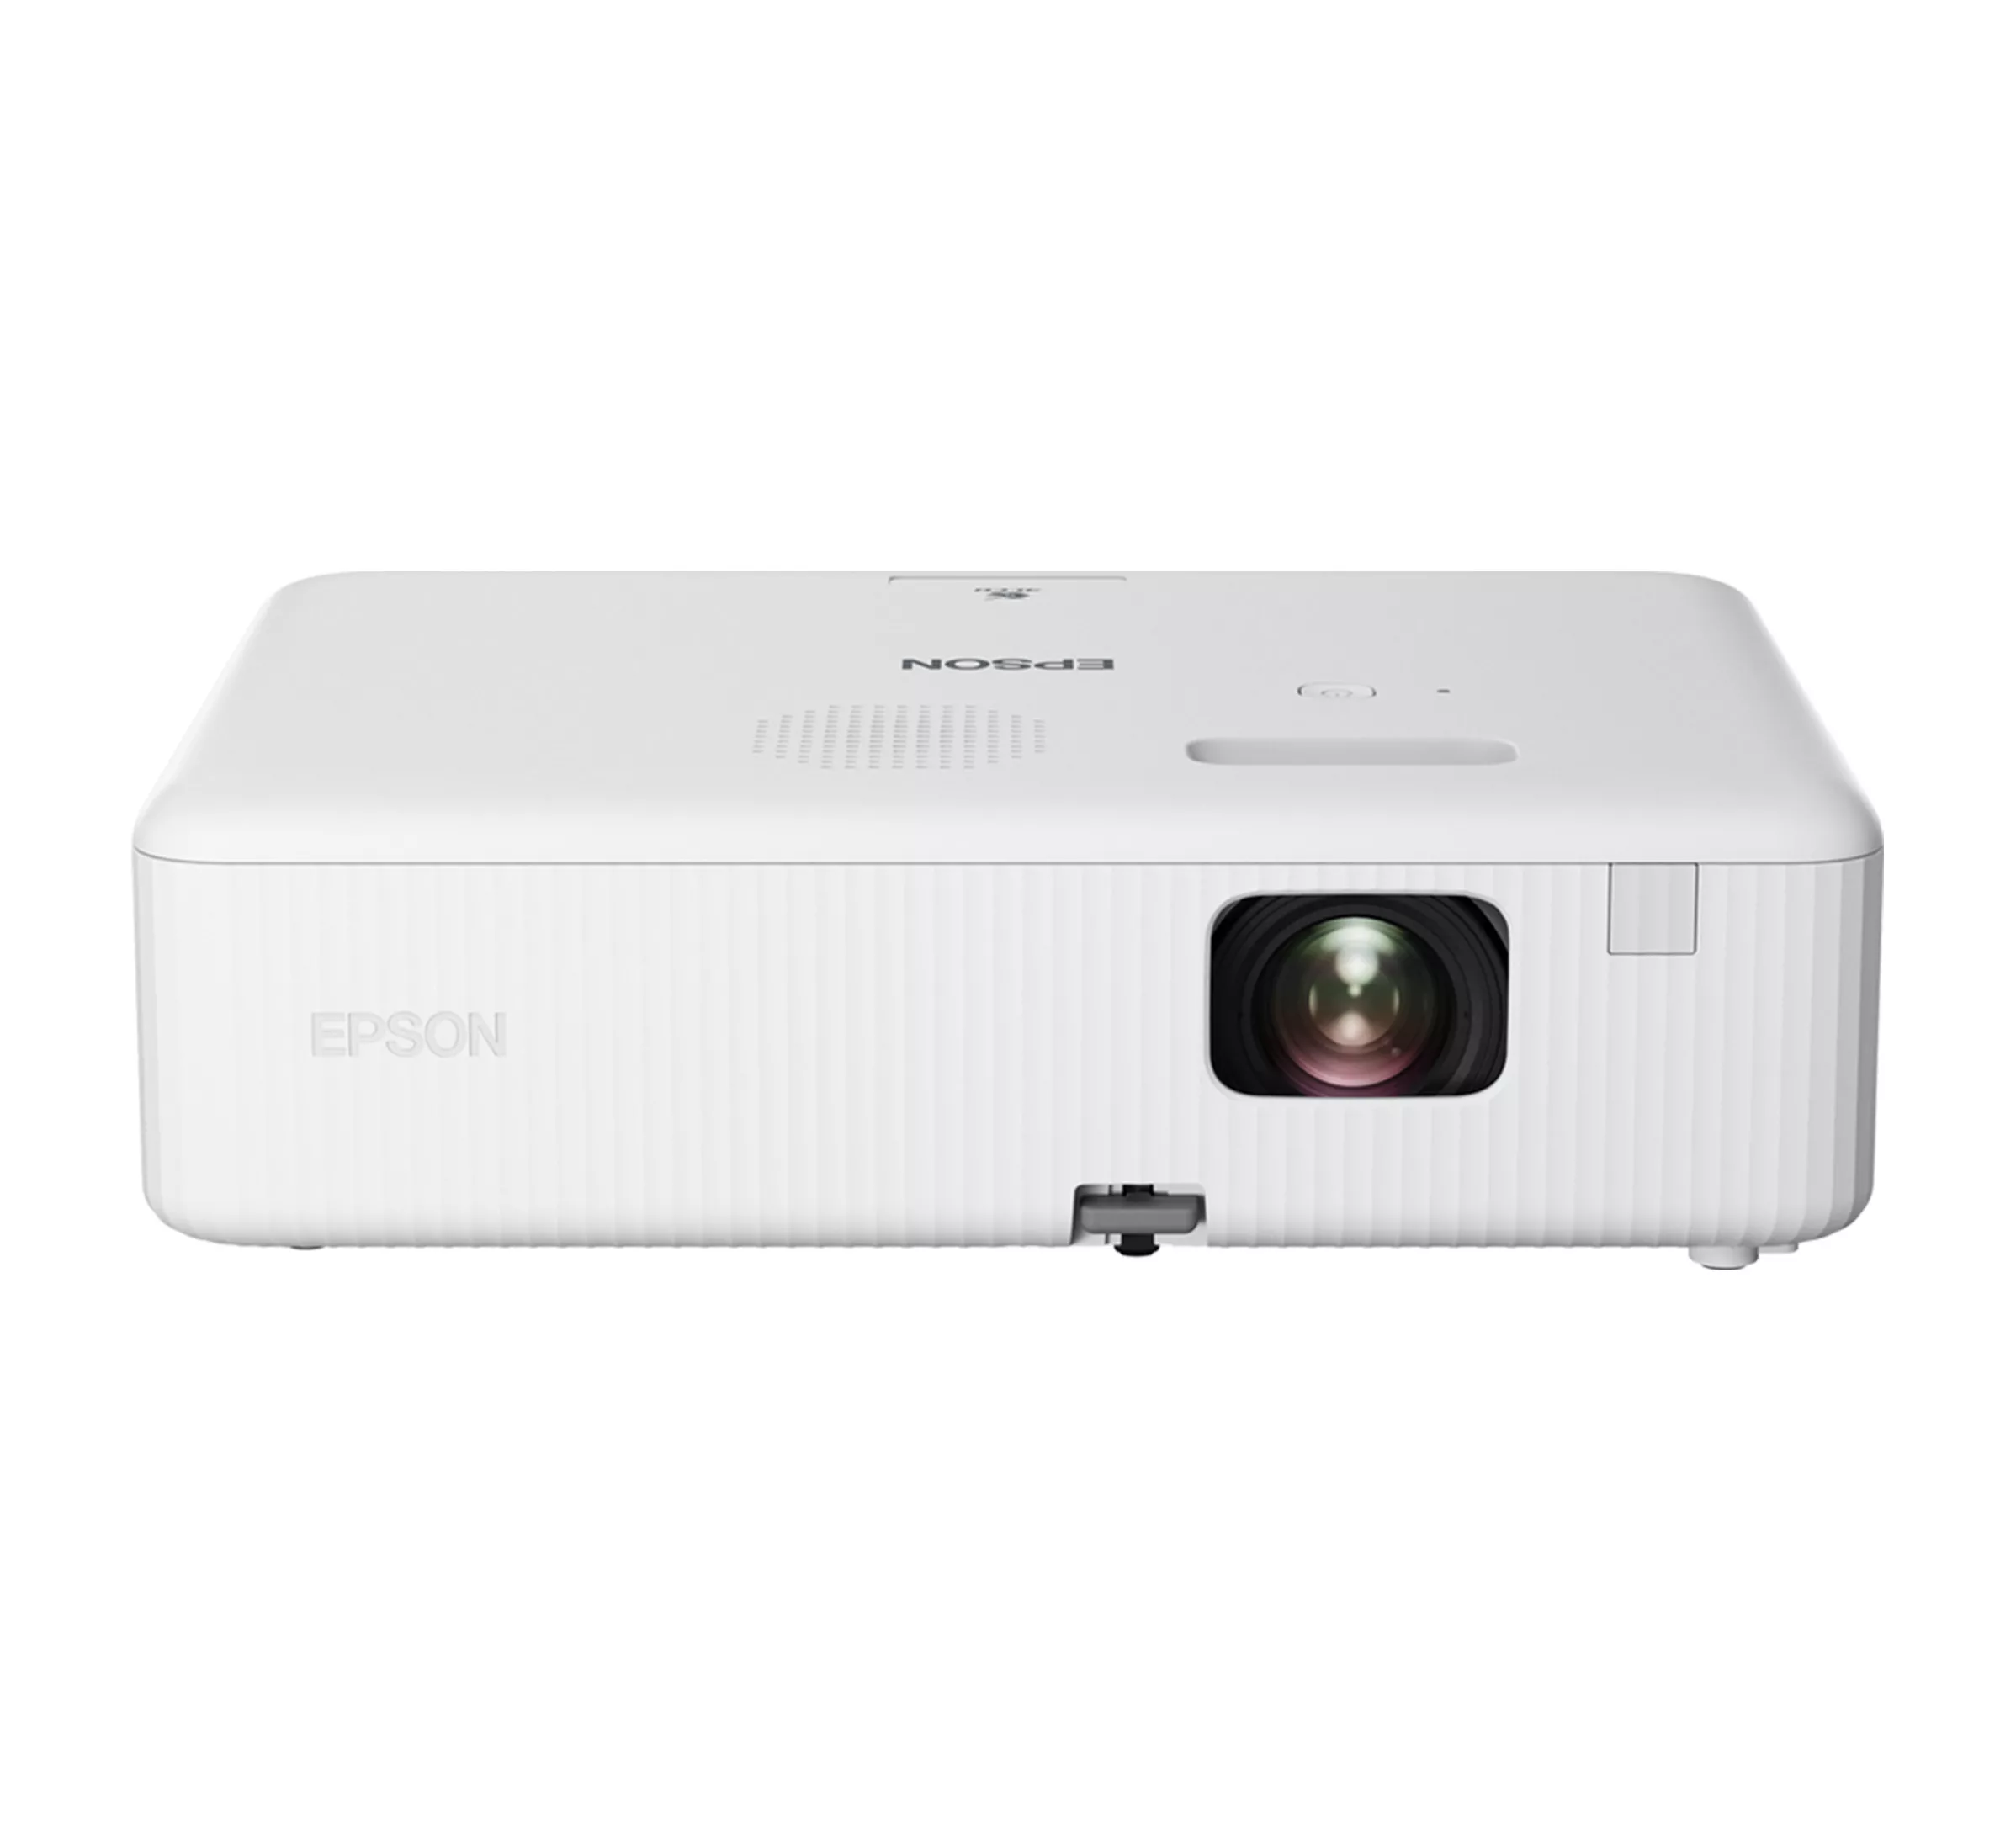 Epson proyector multimedia co-w01 3000 lum diseño compacto